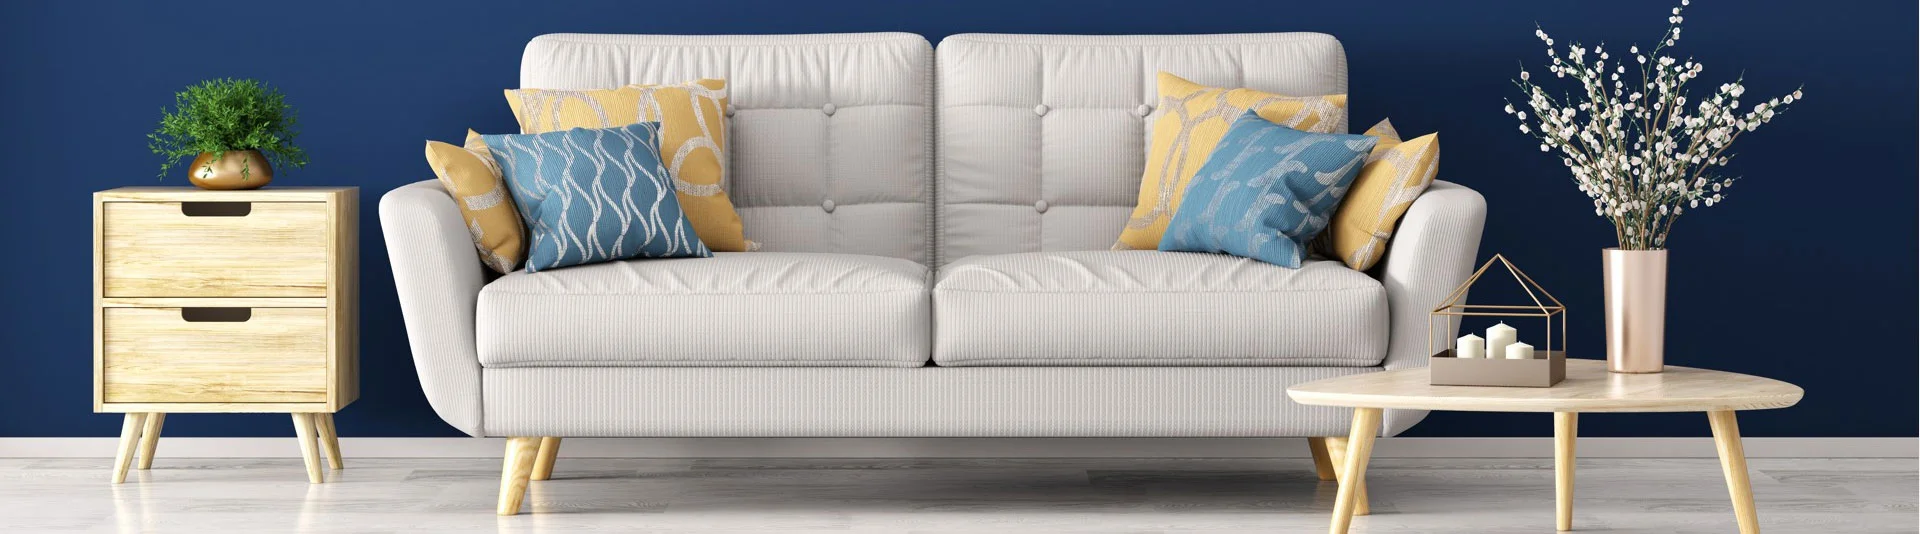 sofa reupholstery Dubai 